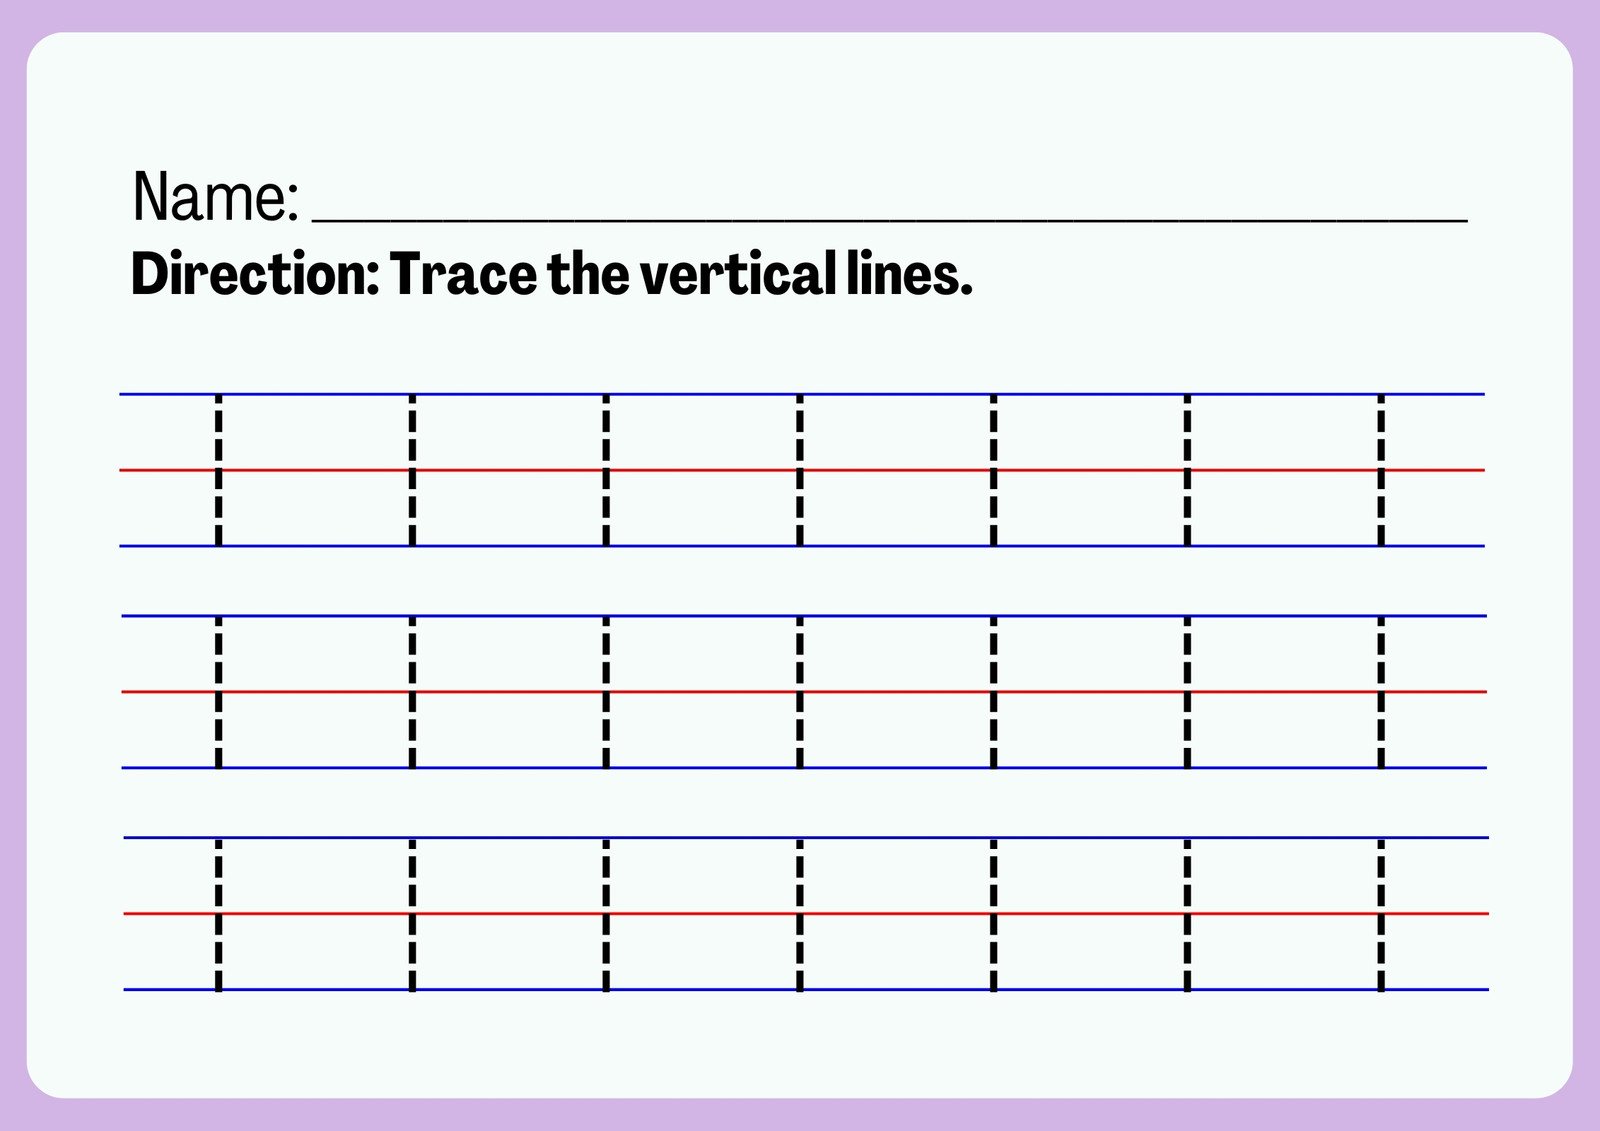 Canva Cream Simple Vertical Line Tracing Worksheet Q WEg8yw6ko 